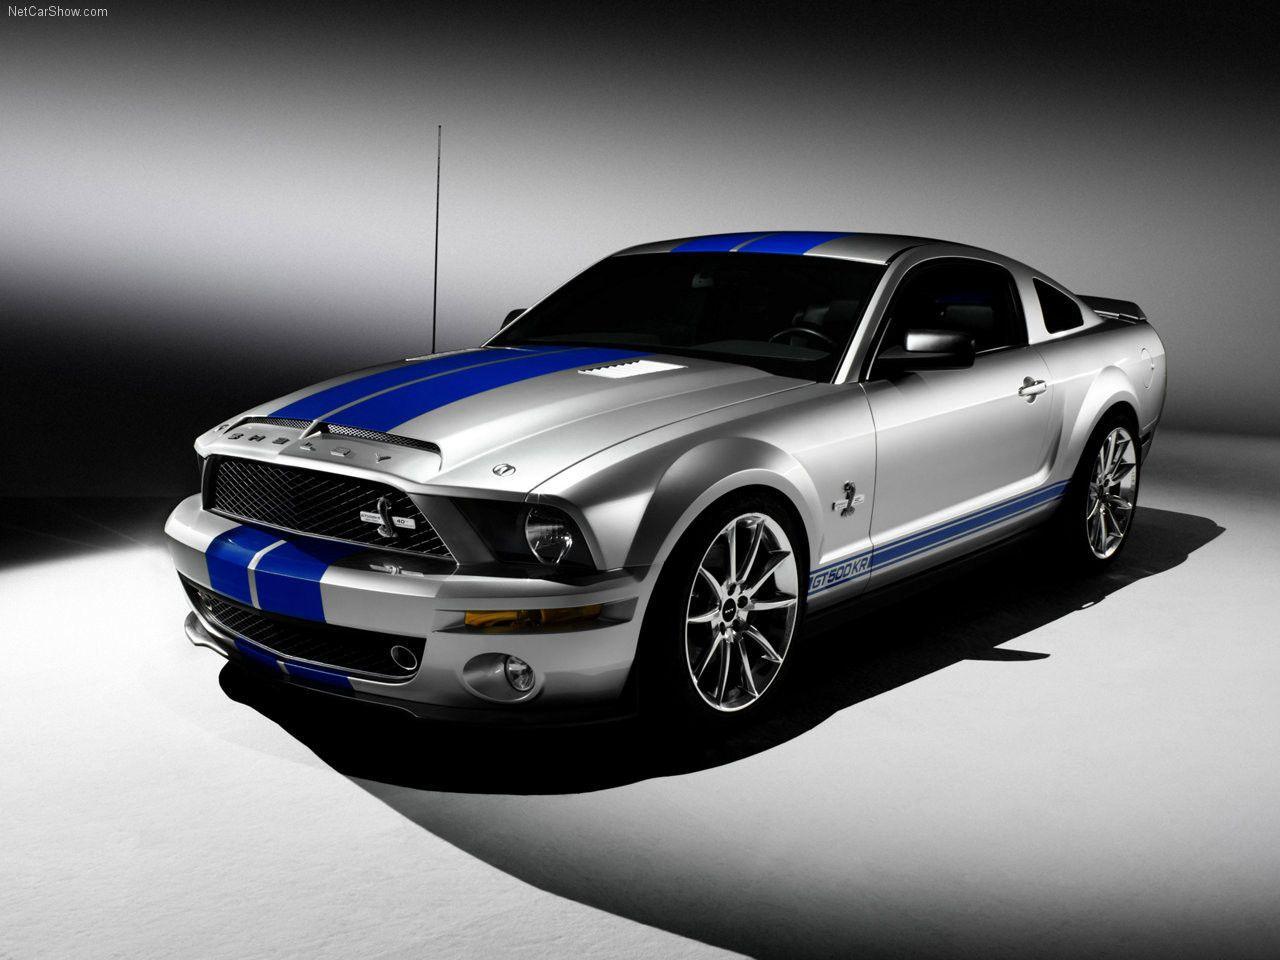 Mustang Car Hd Images Download